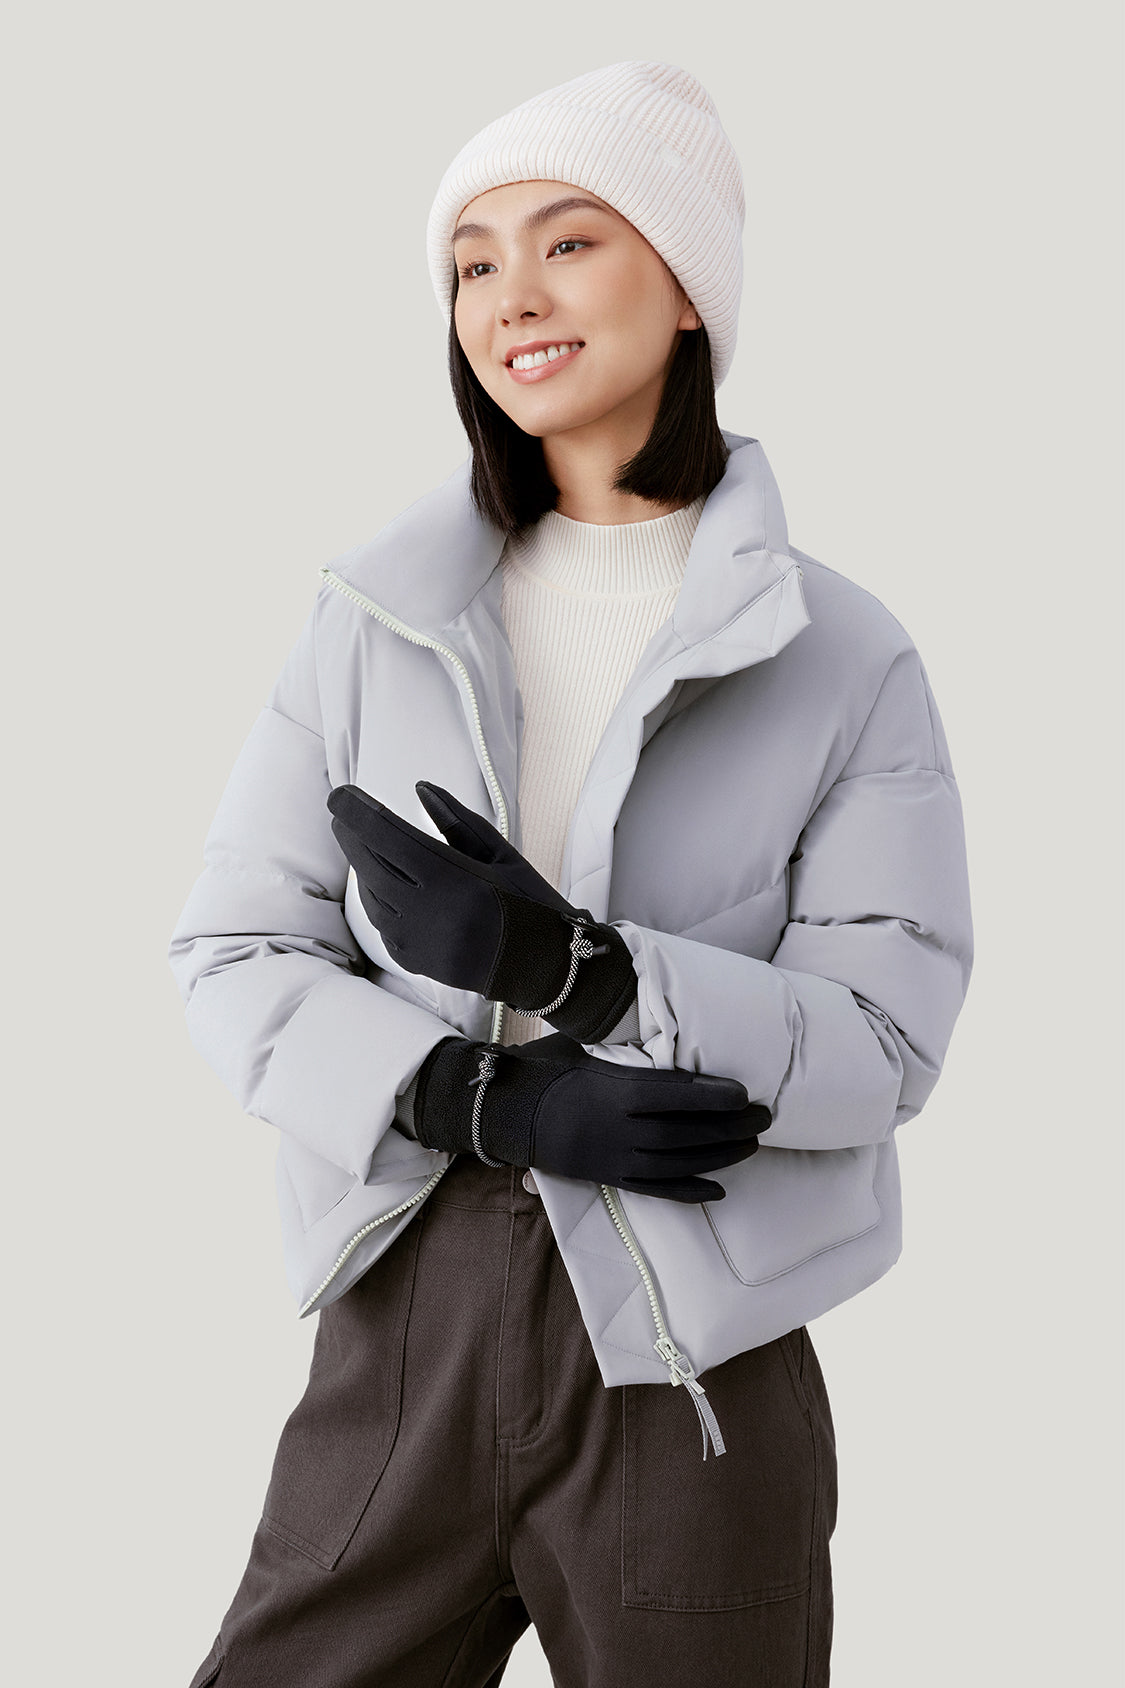 Beneunder Knitted Winter Gloves, Women's Touch-Screen Warm Gloves